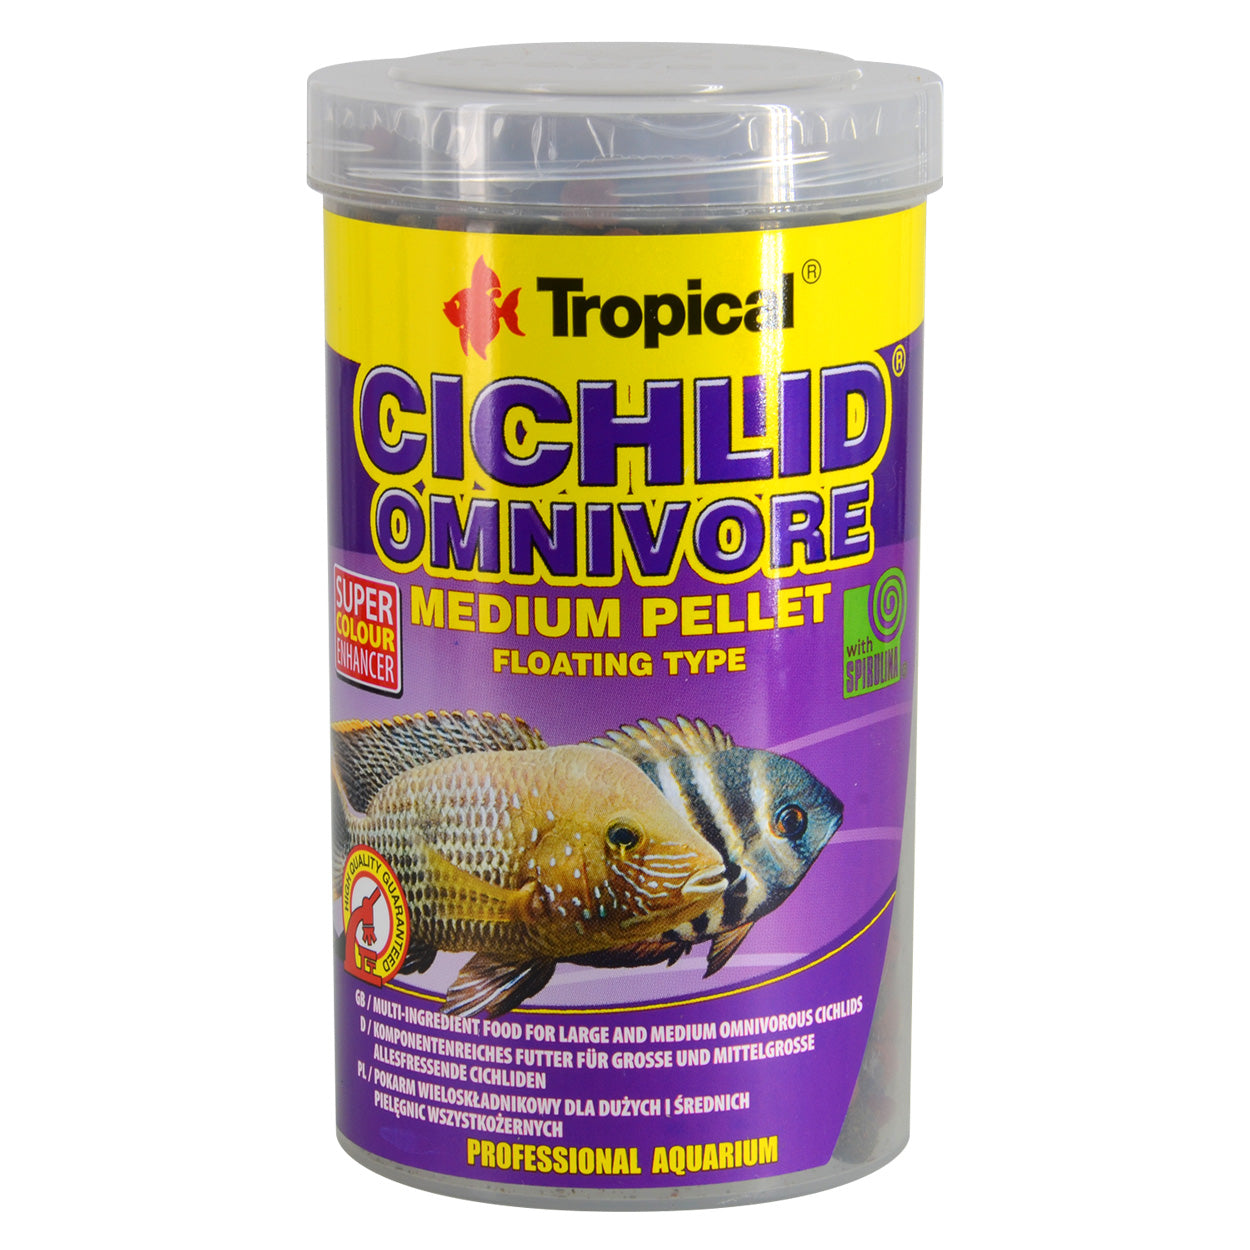 Tropical Cichlid Omnivore Medium Pellet - Floating